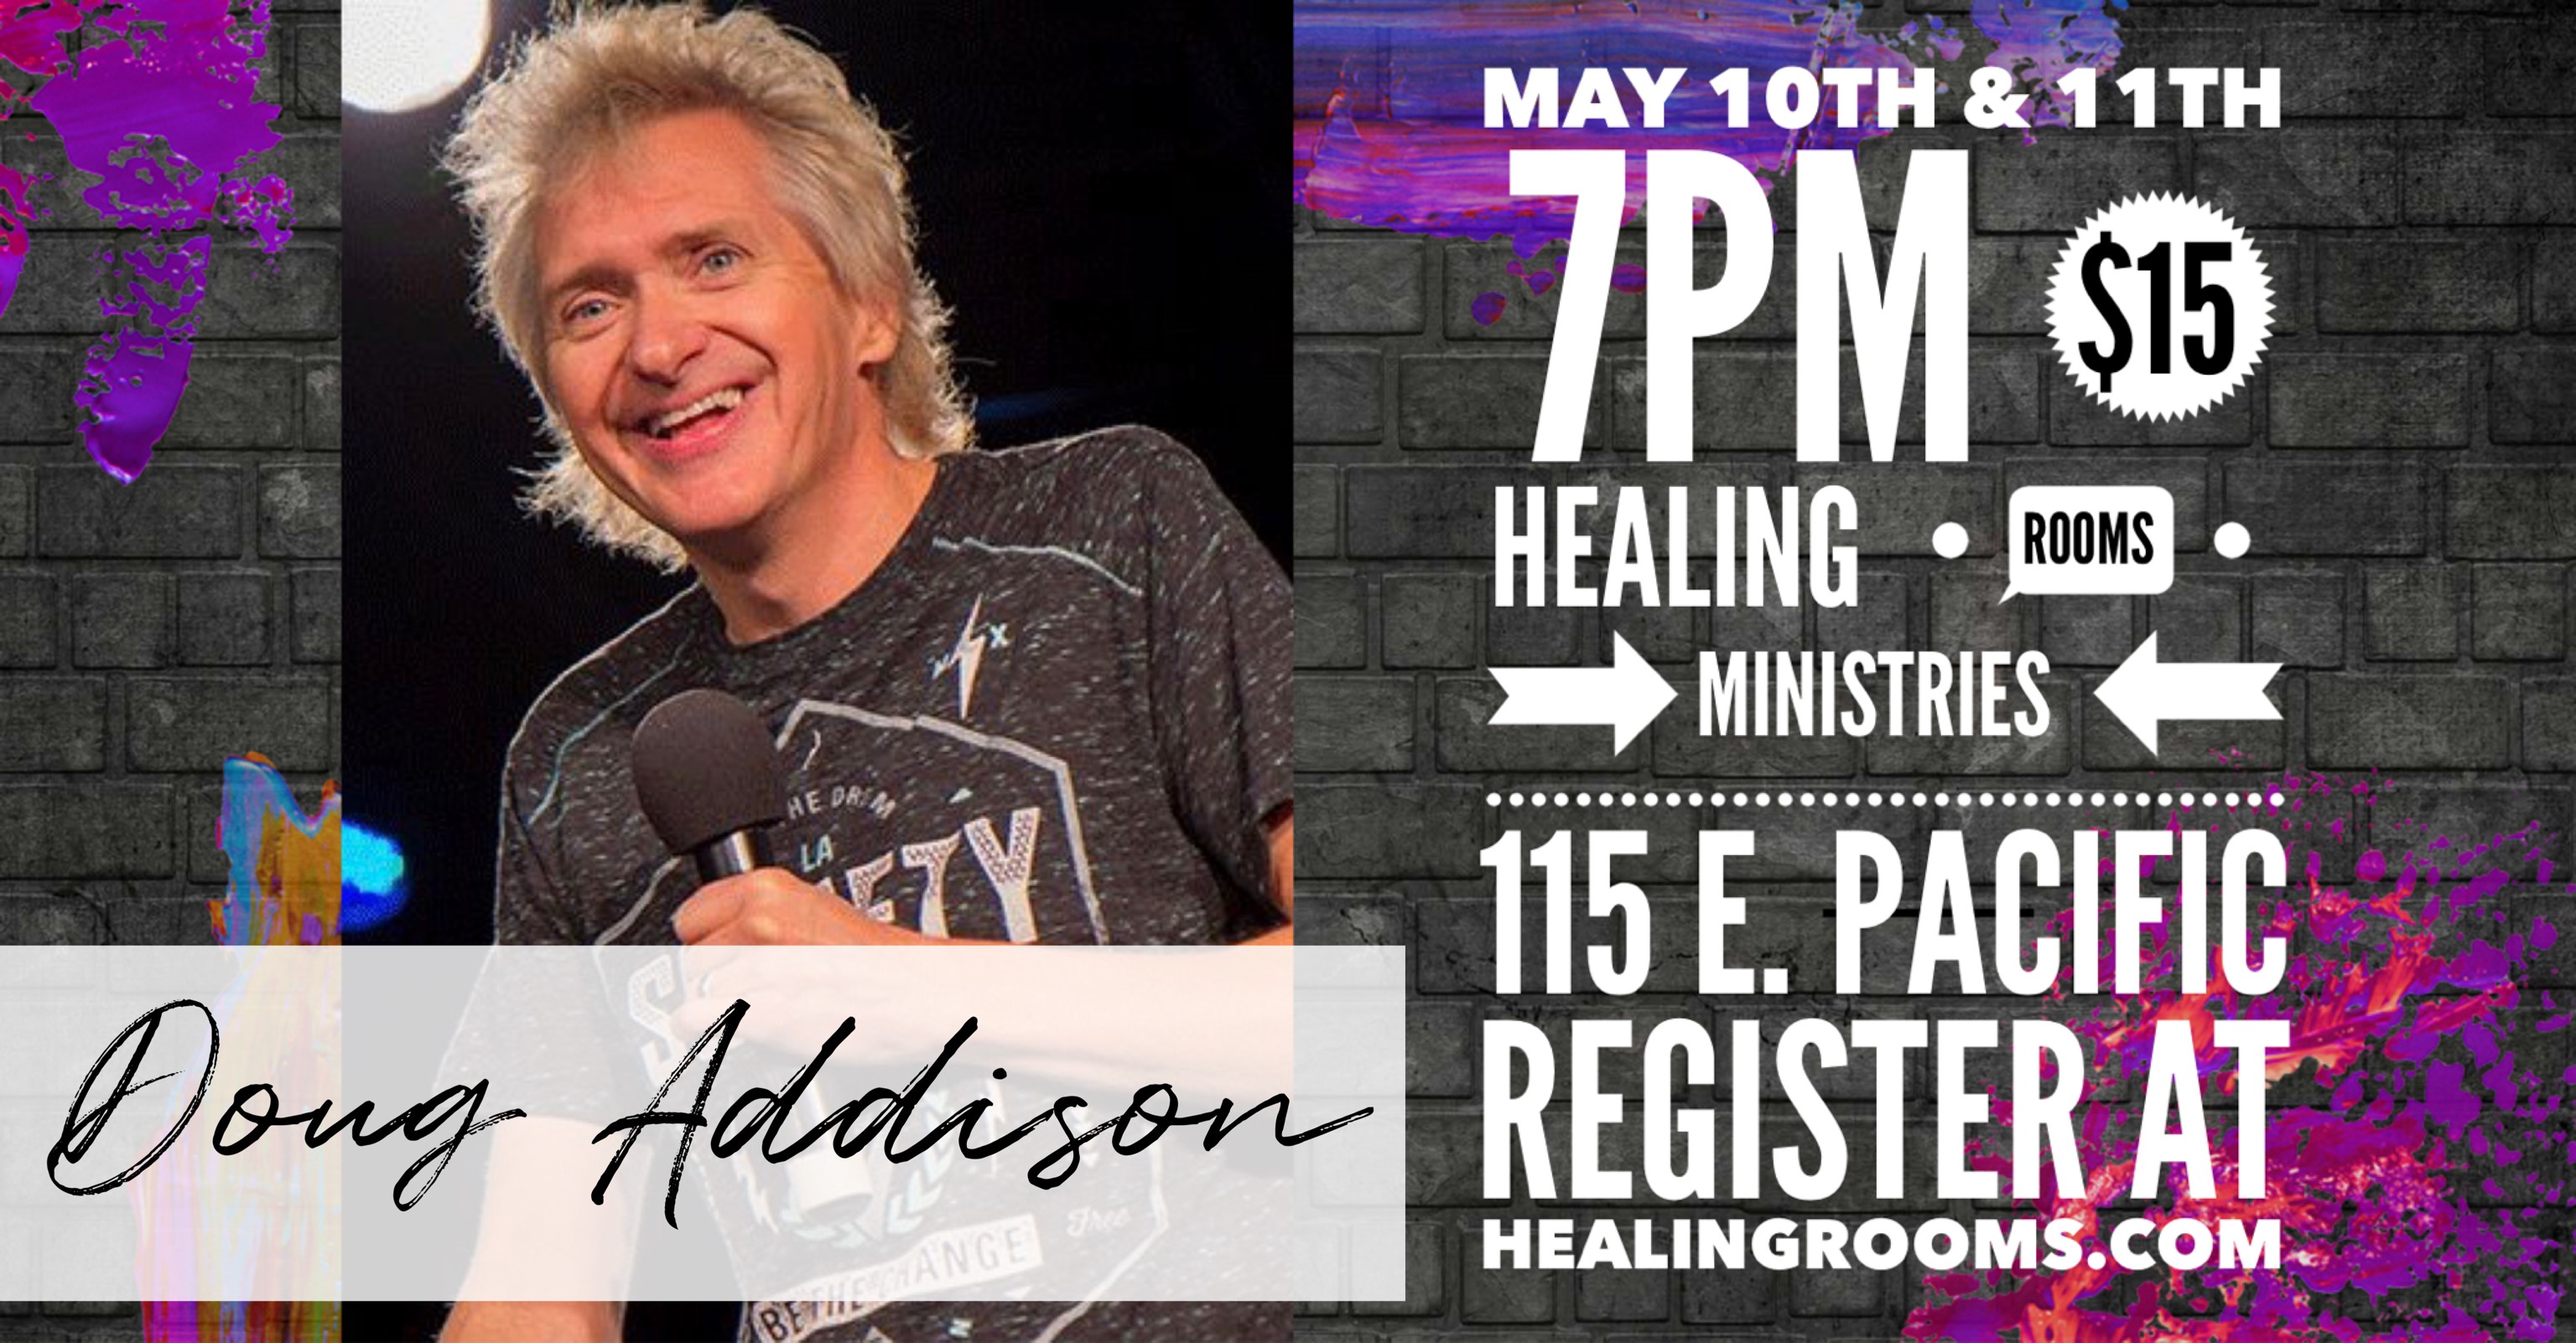 Spokane, Washington - Healing Rooms May 11th